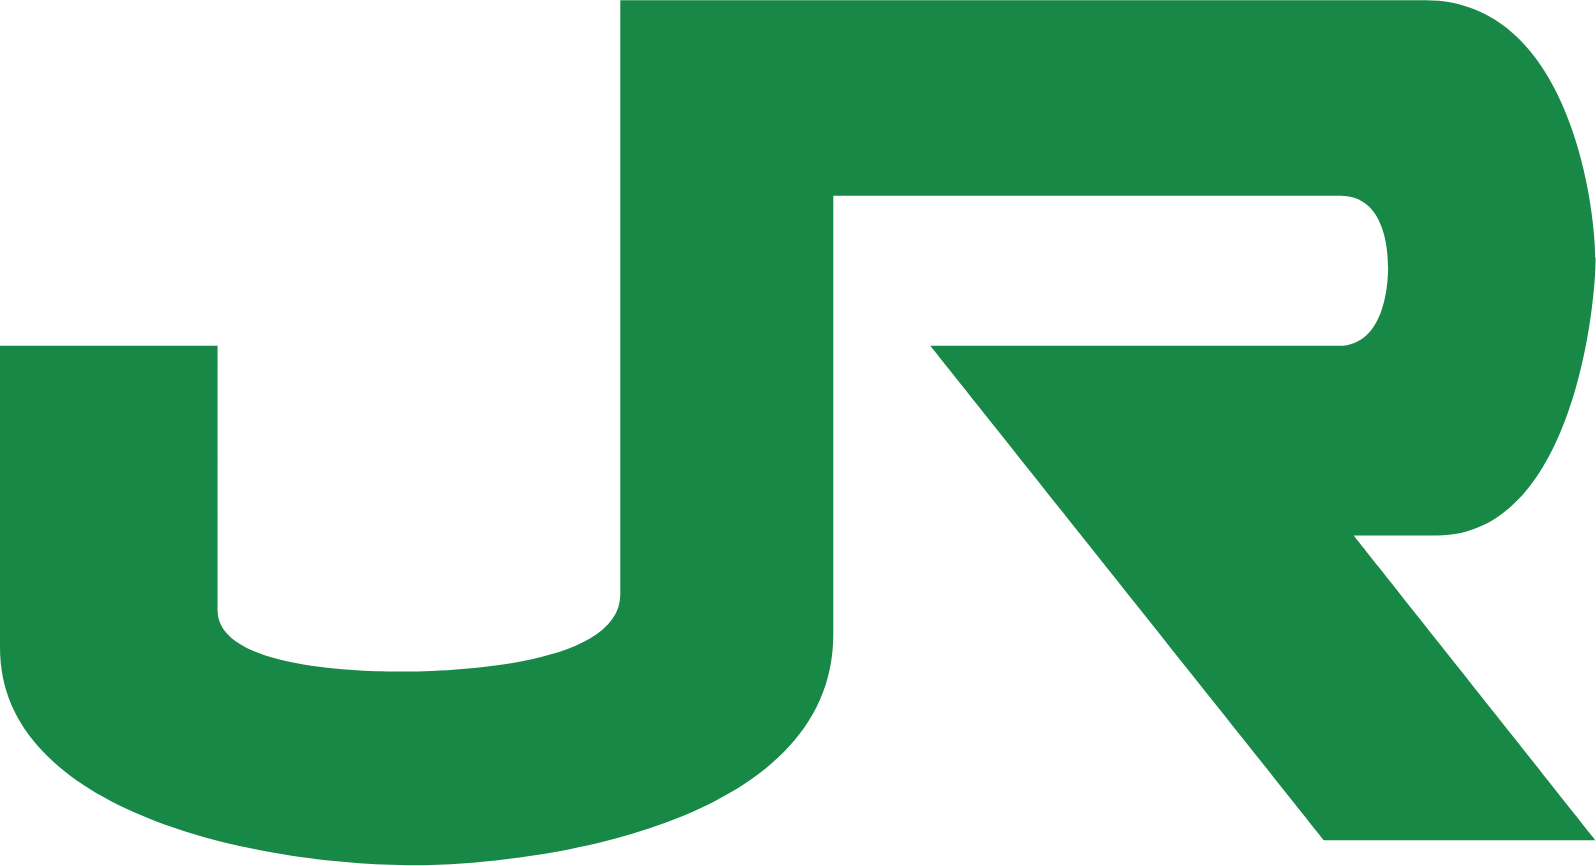 East Japan Railway logo (transparent PNG)